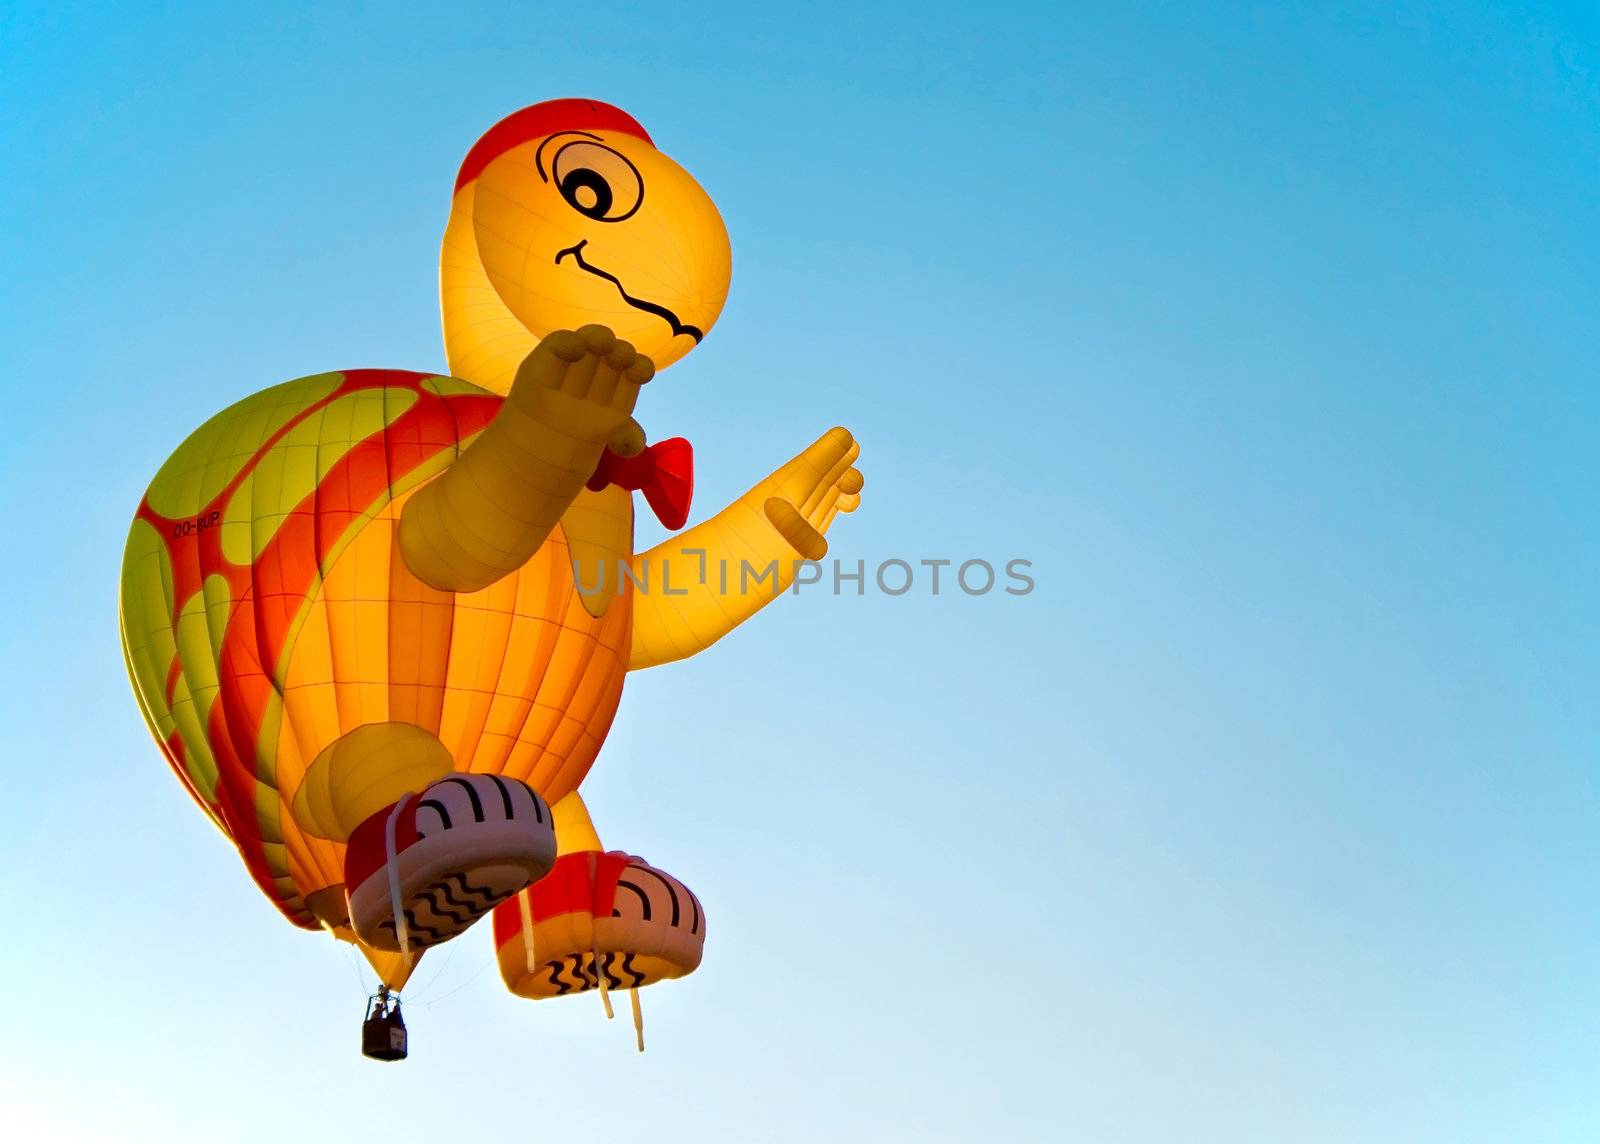 A turtle air balloon against a clear blue sky at the festival.